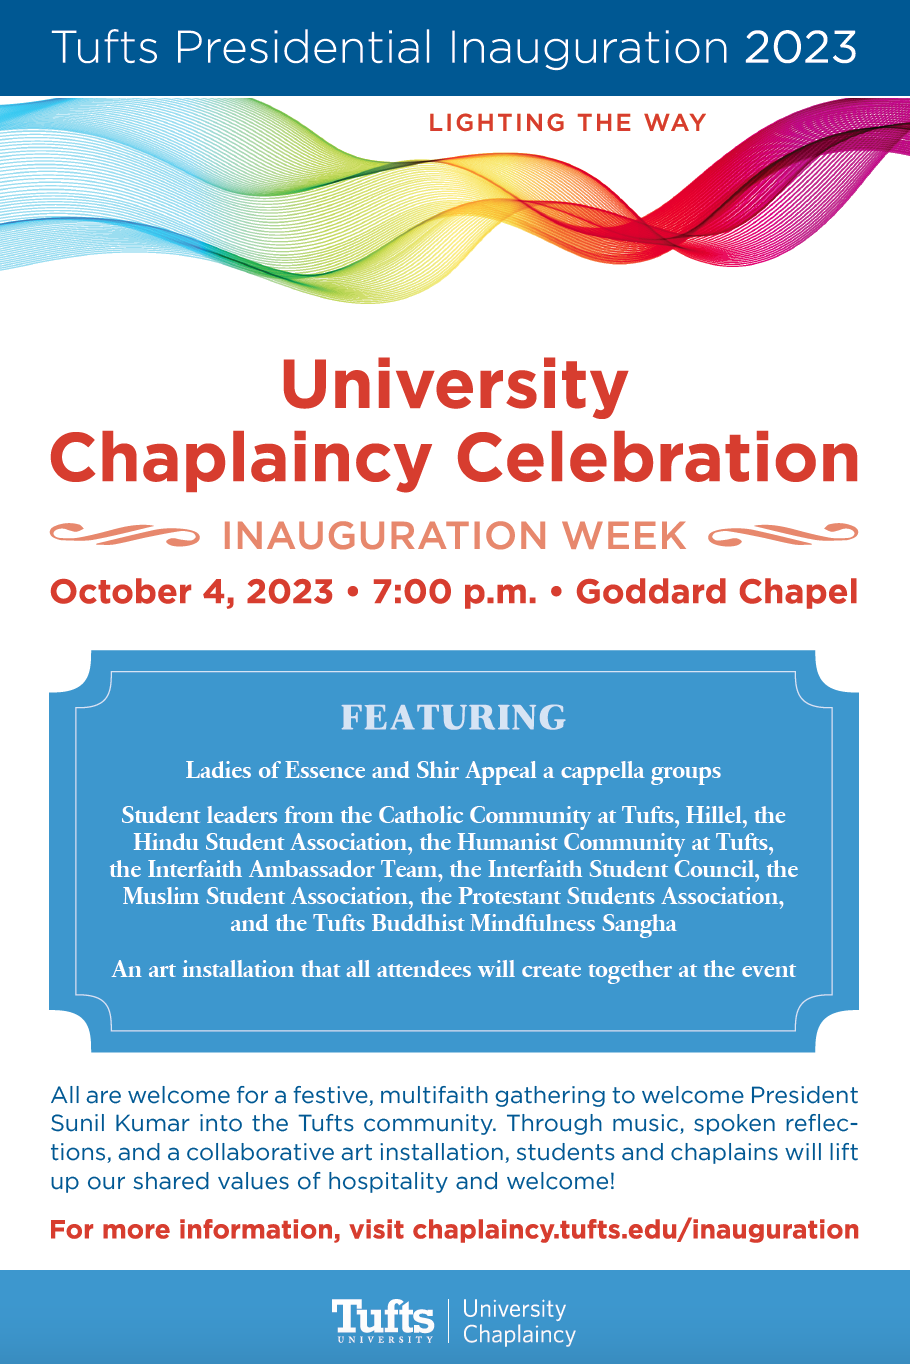 University Chaplaincy Event Oct 4 7pm